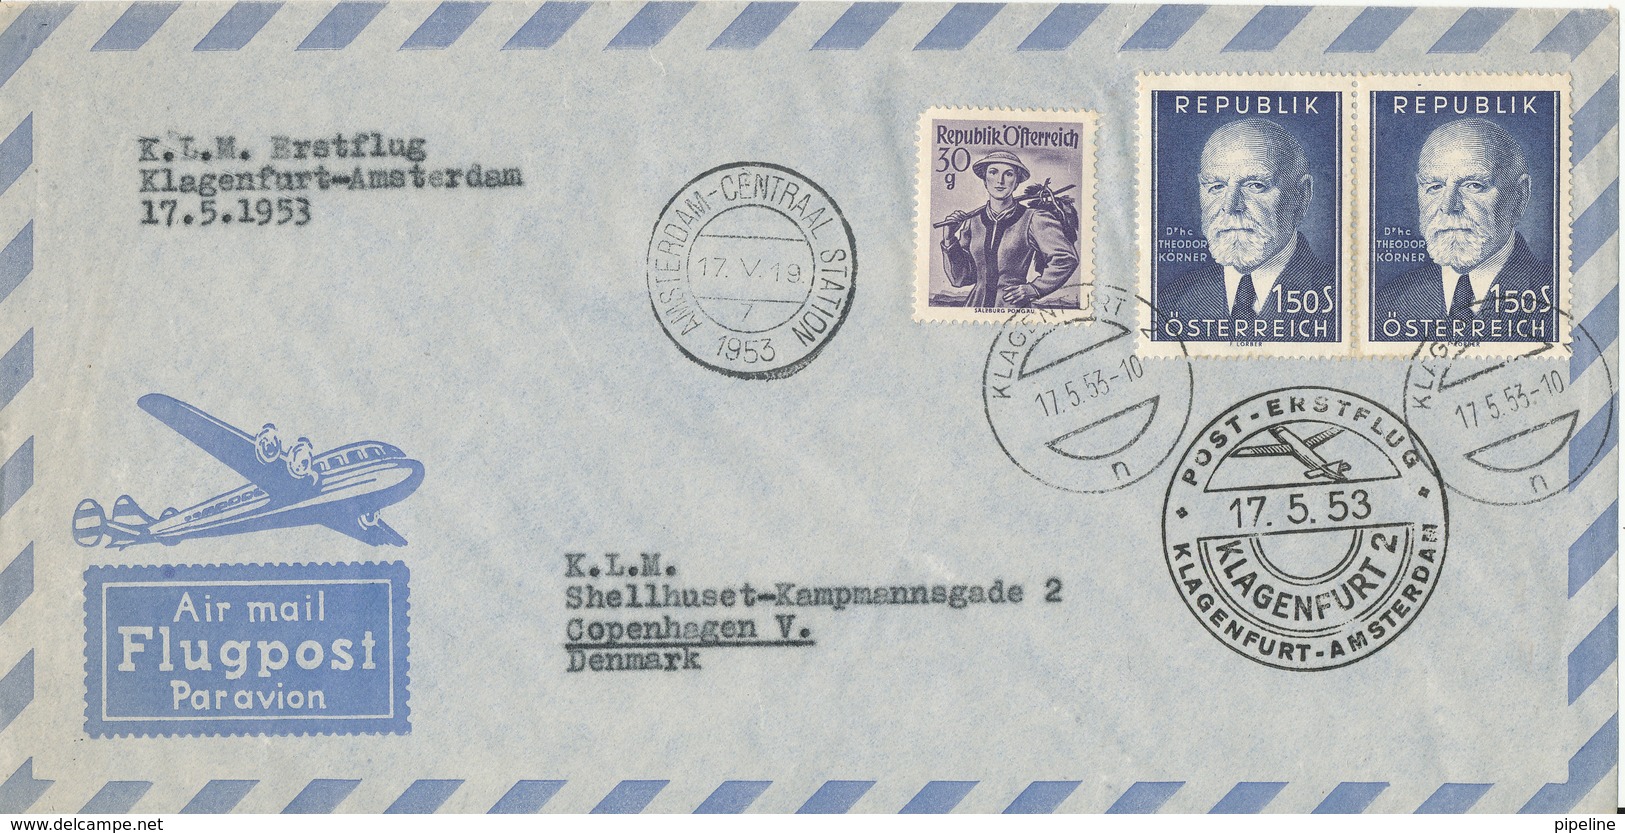 Austria First Flight KLM Klagenfurt - Amsterdam 17-5-1953 Air Mail Cover Sent To Denmark - Primi Voli